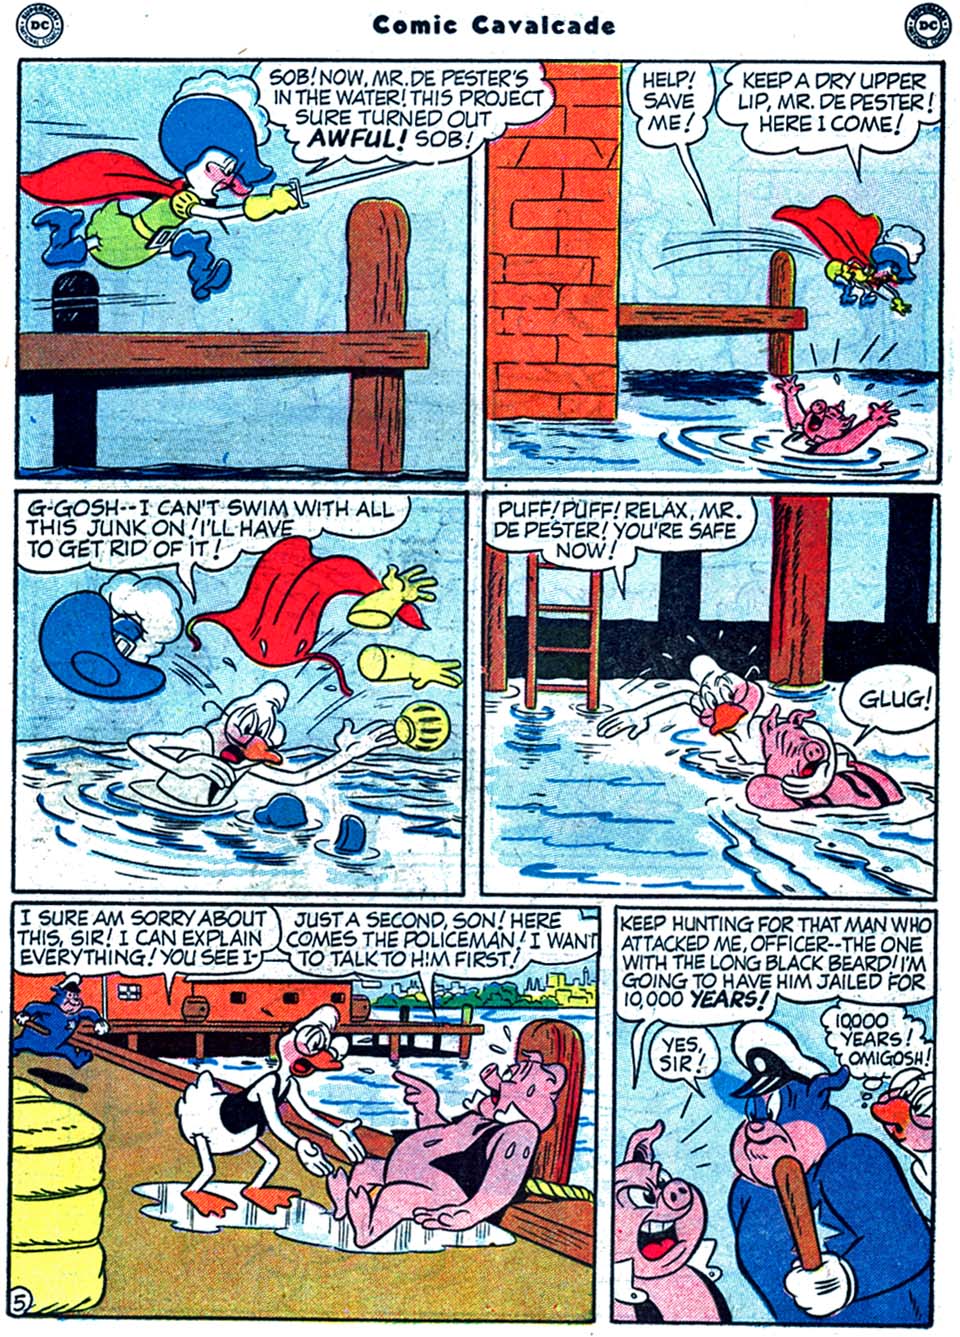 Comic Cavalcade issue 44 - Page 45